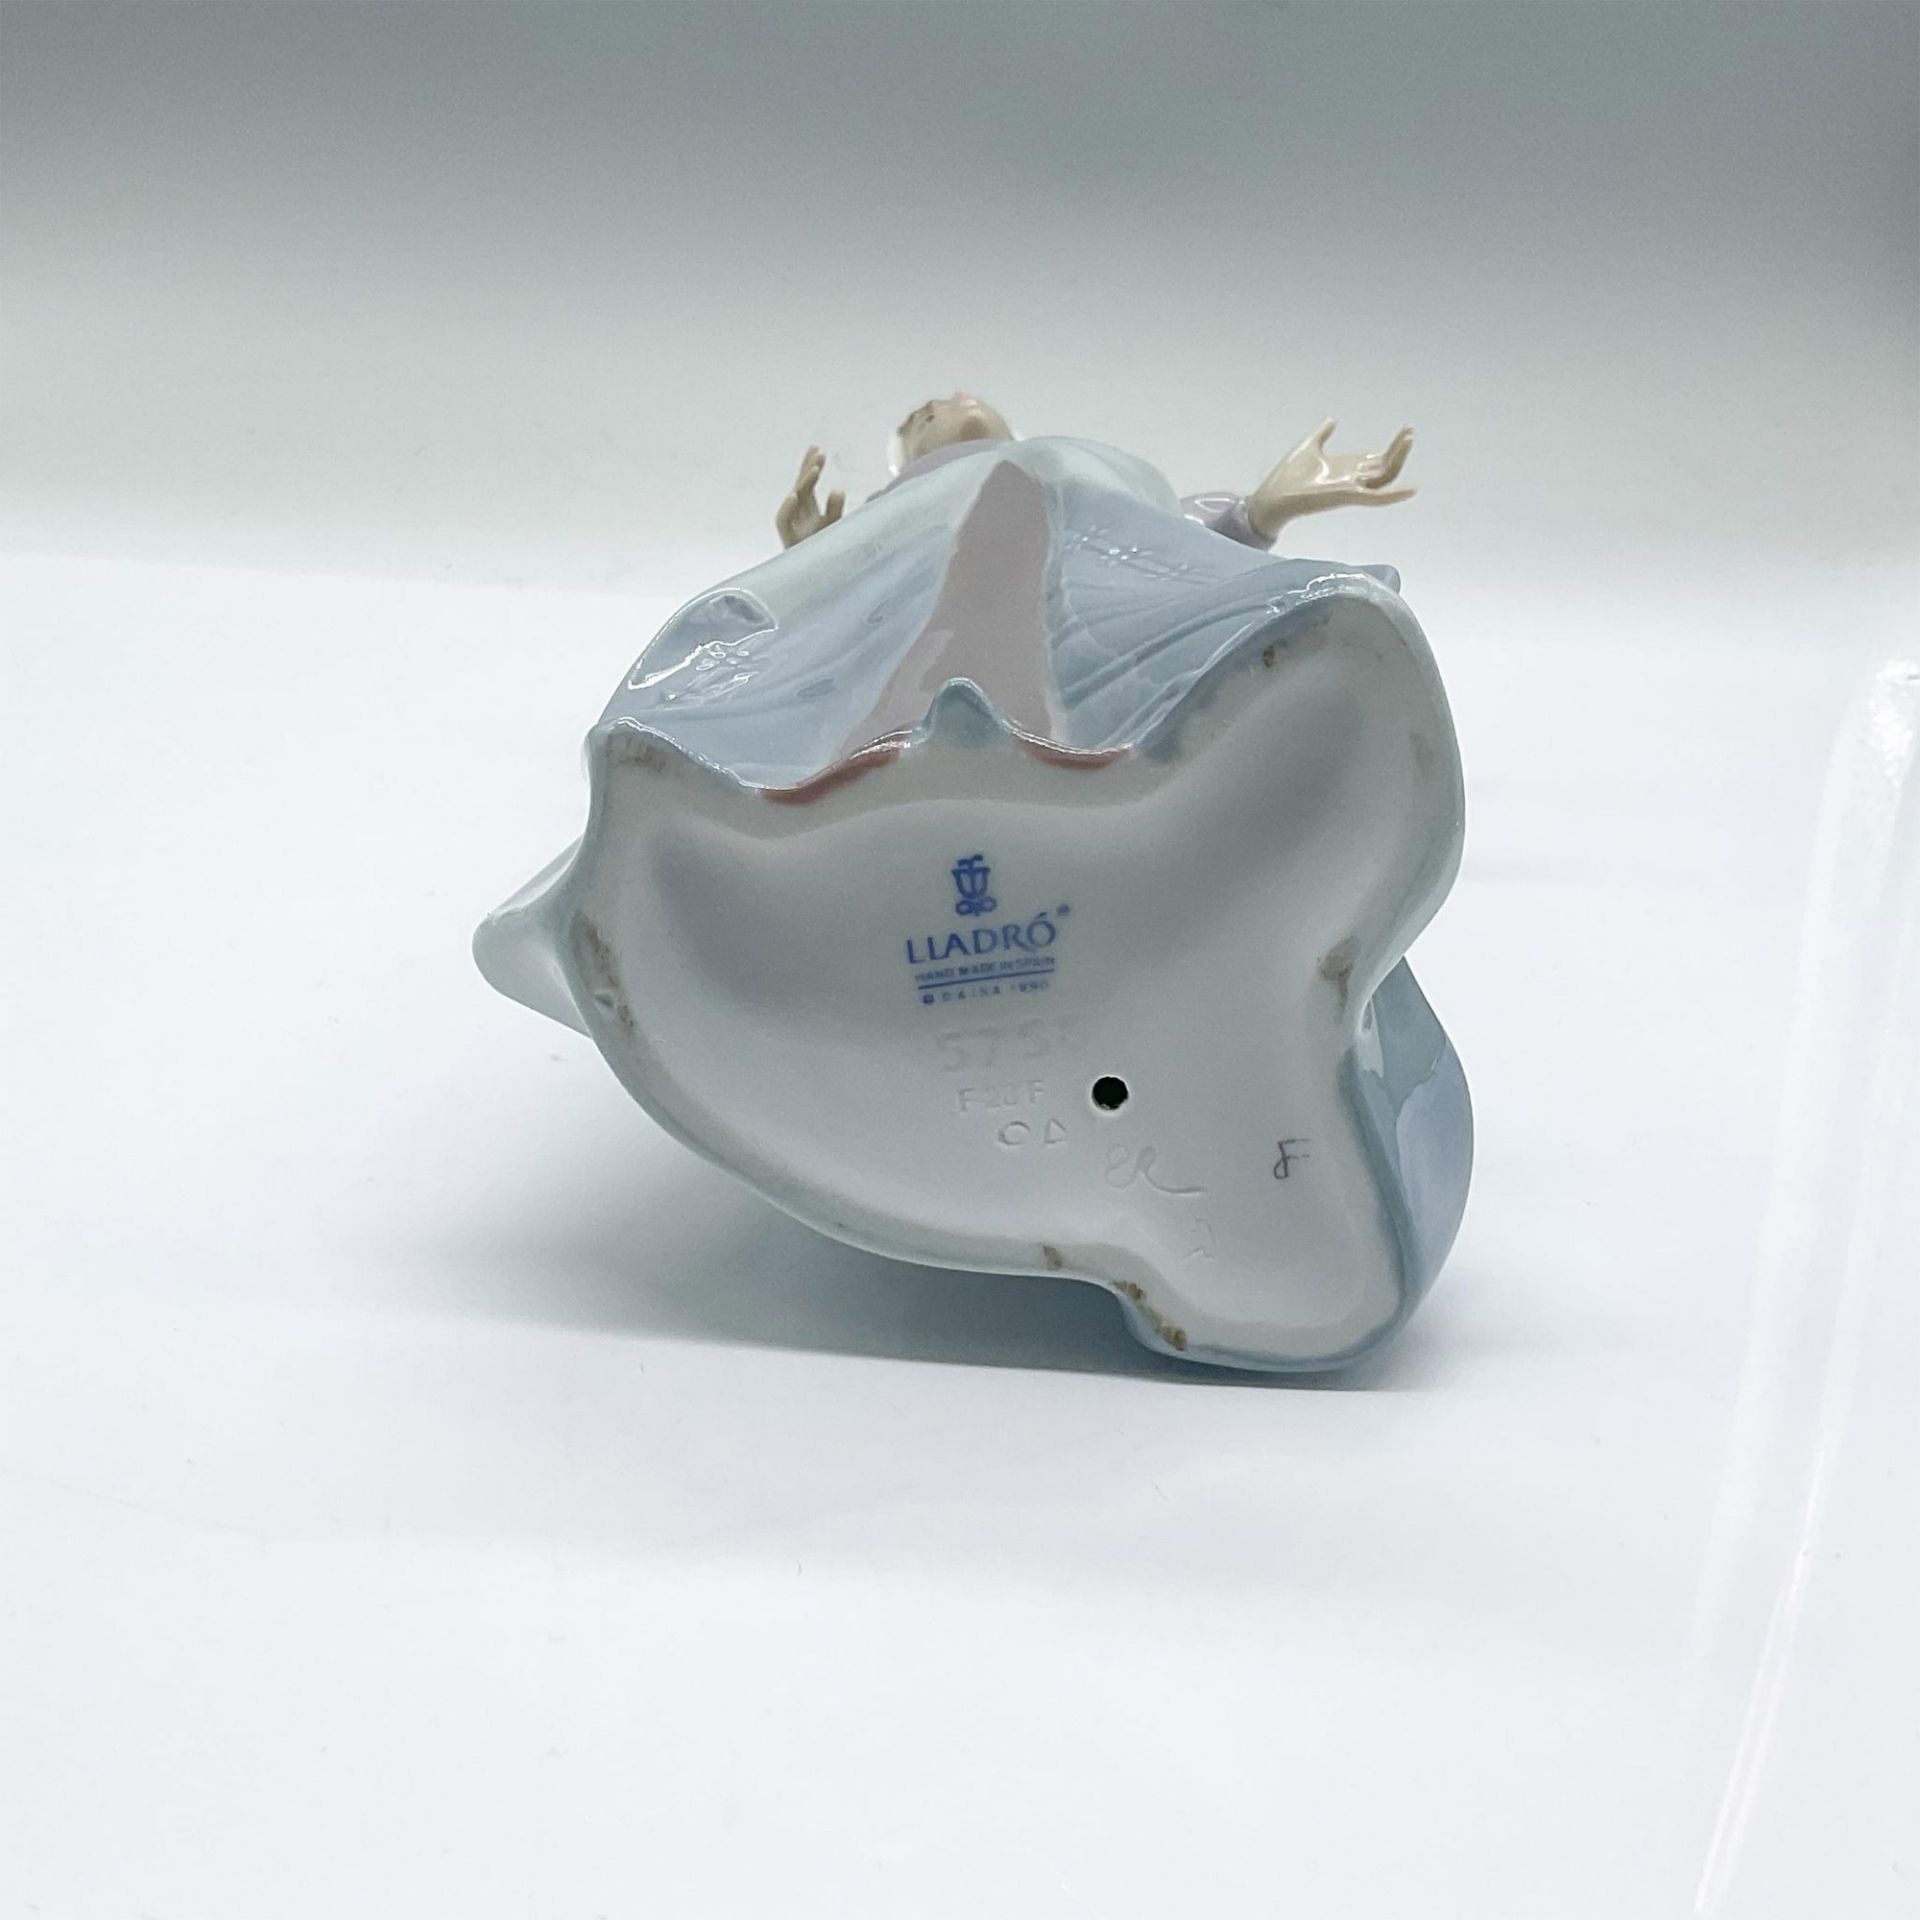 Lladro Porcelain Figurine, Claudette - Image 3 of 3